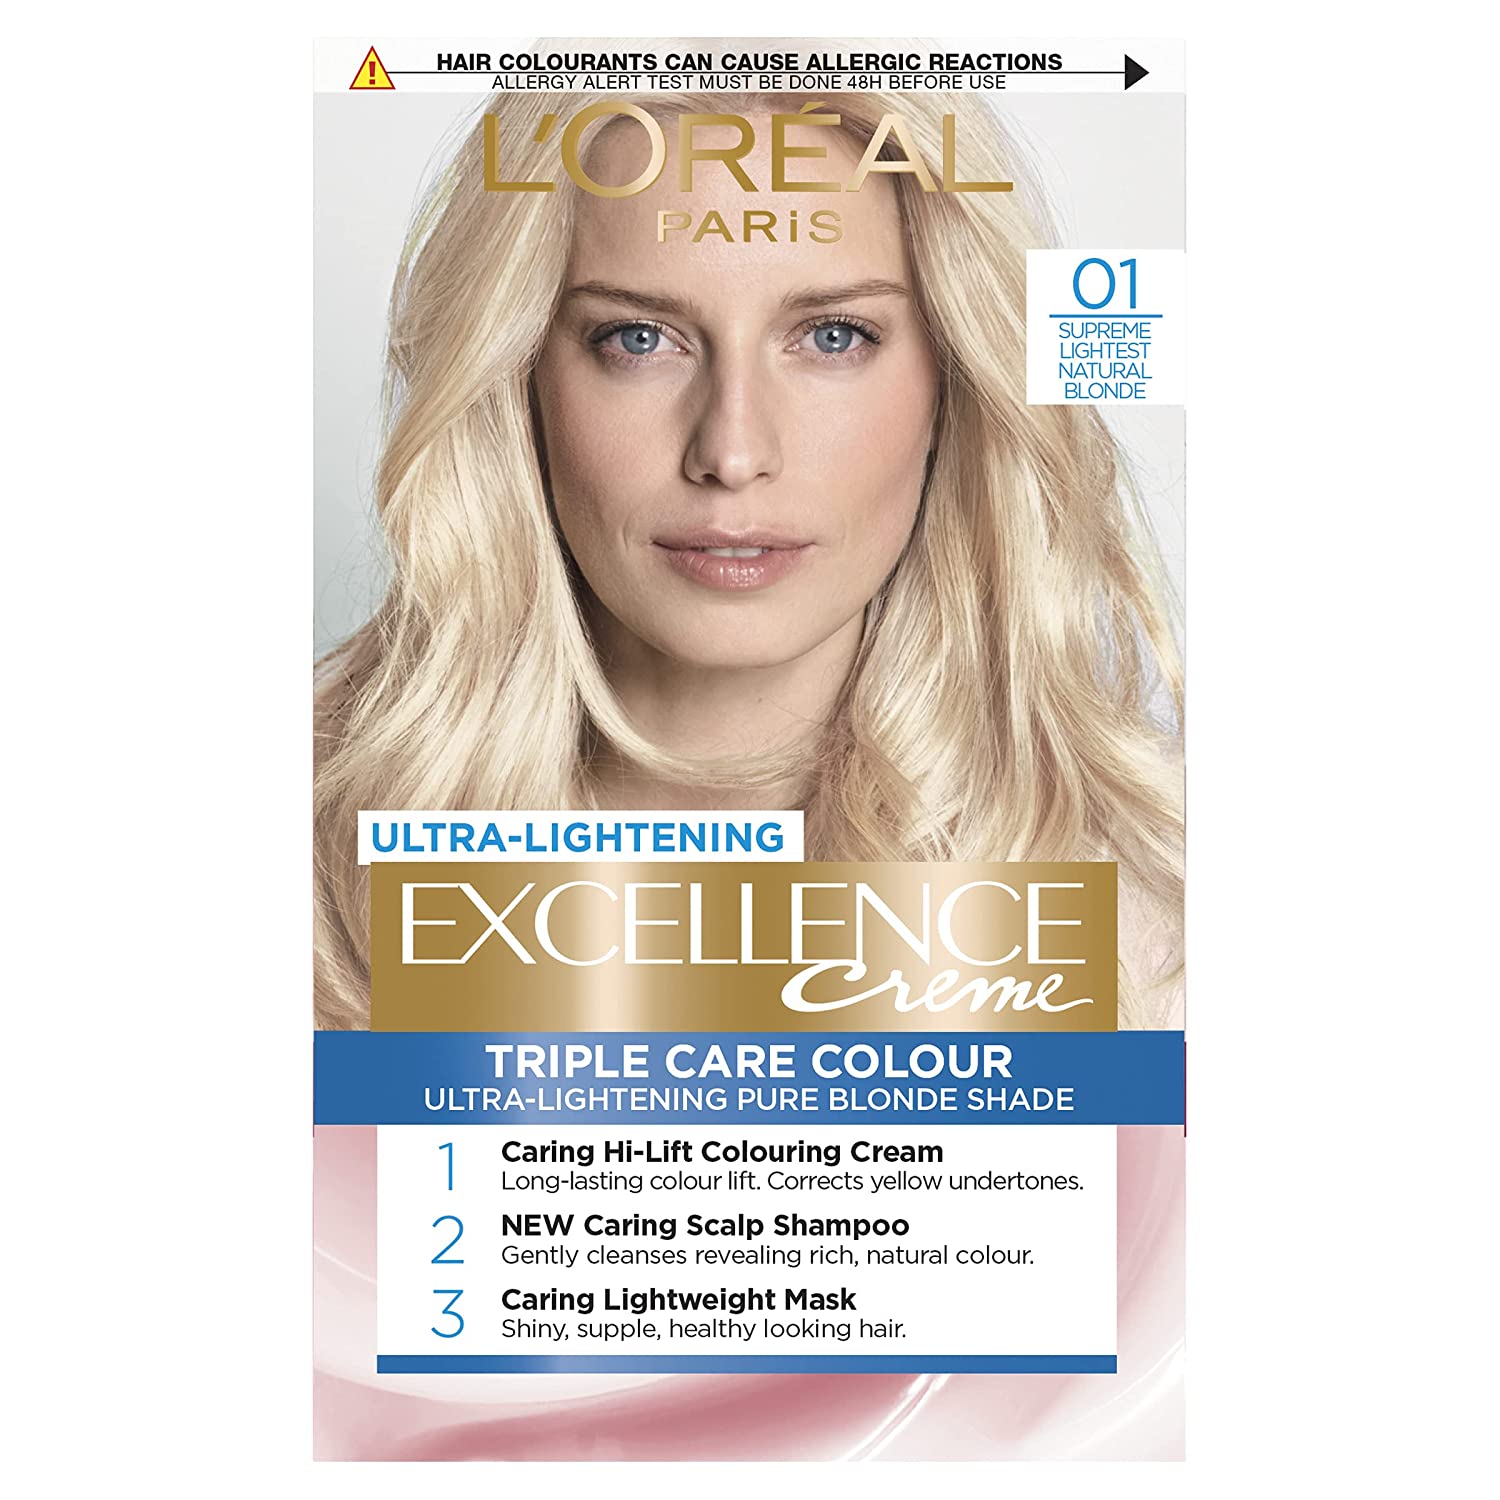 L \ 'Oreal Excellence Blonde Supreme permanent hair color 01 Light test natural blonde